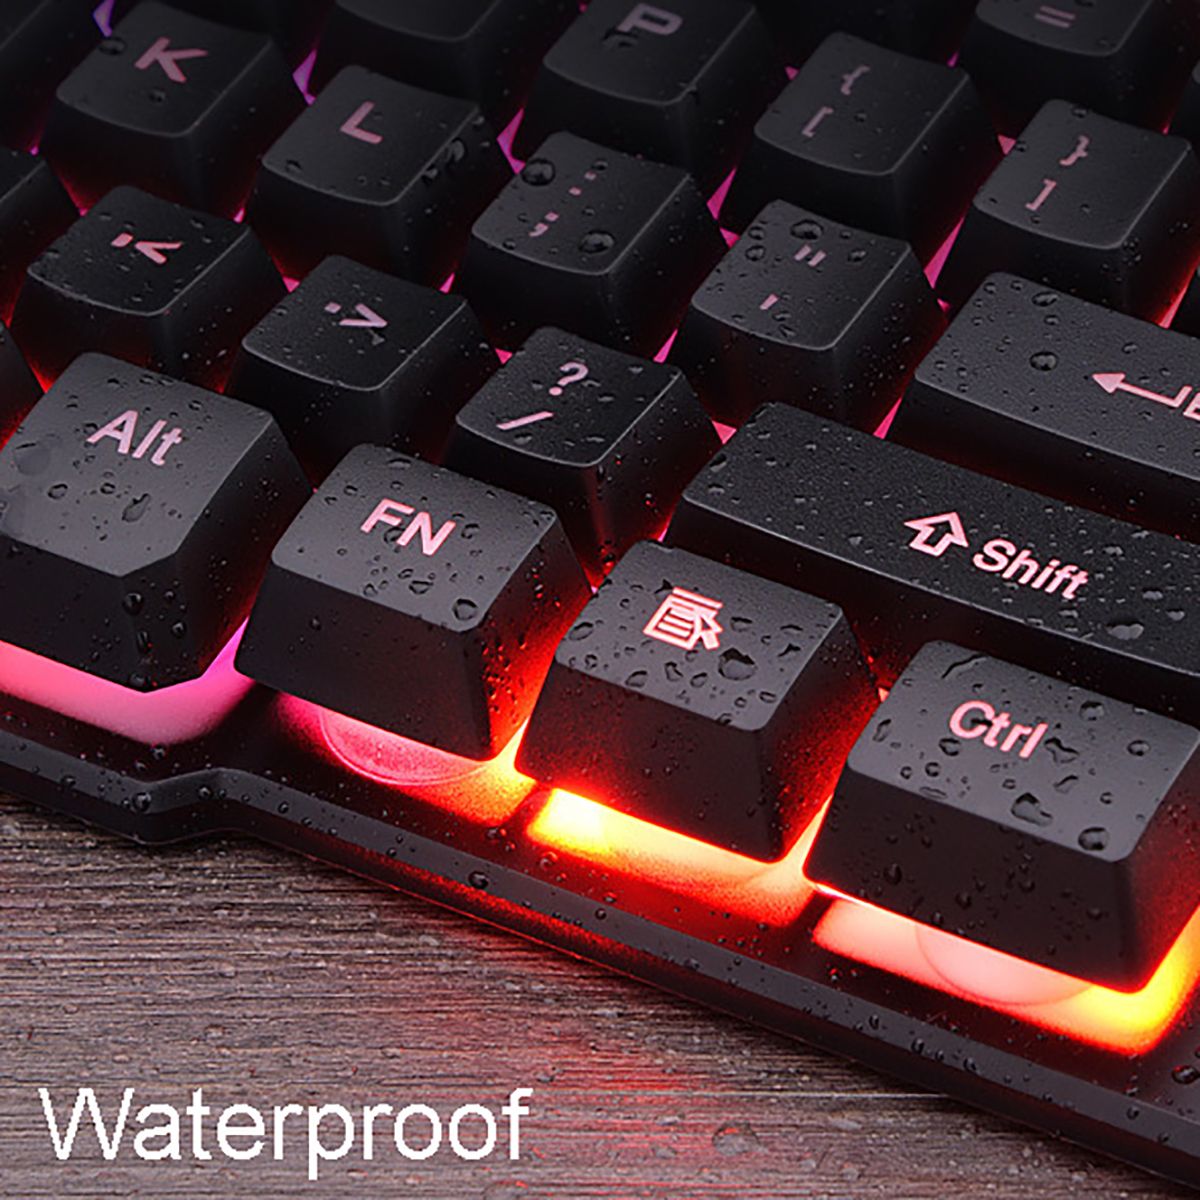 GX50-104-Keys-USB-Wired-RGB-Backlit--Waterproof-Ergonomic-layout-ABS-Keycap-Gaming-Keyboard-1653362